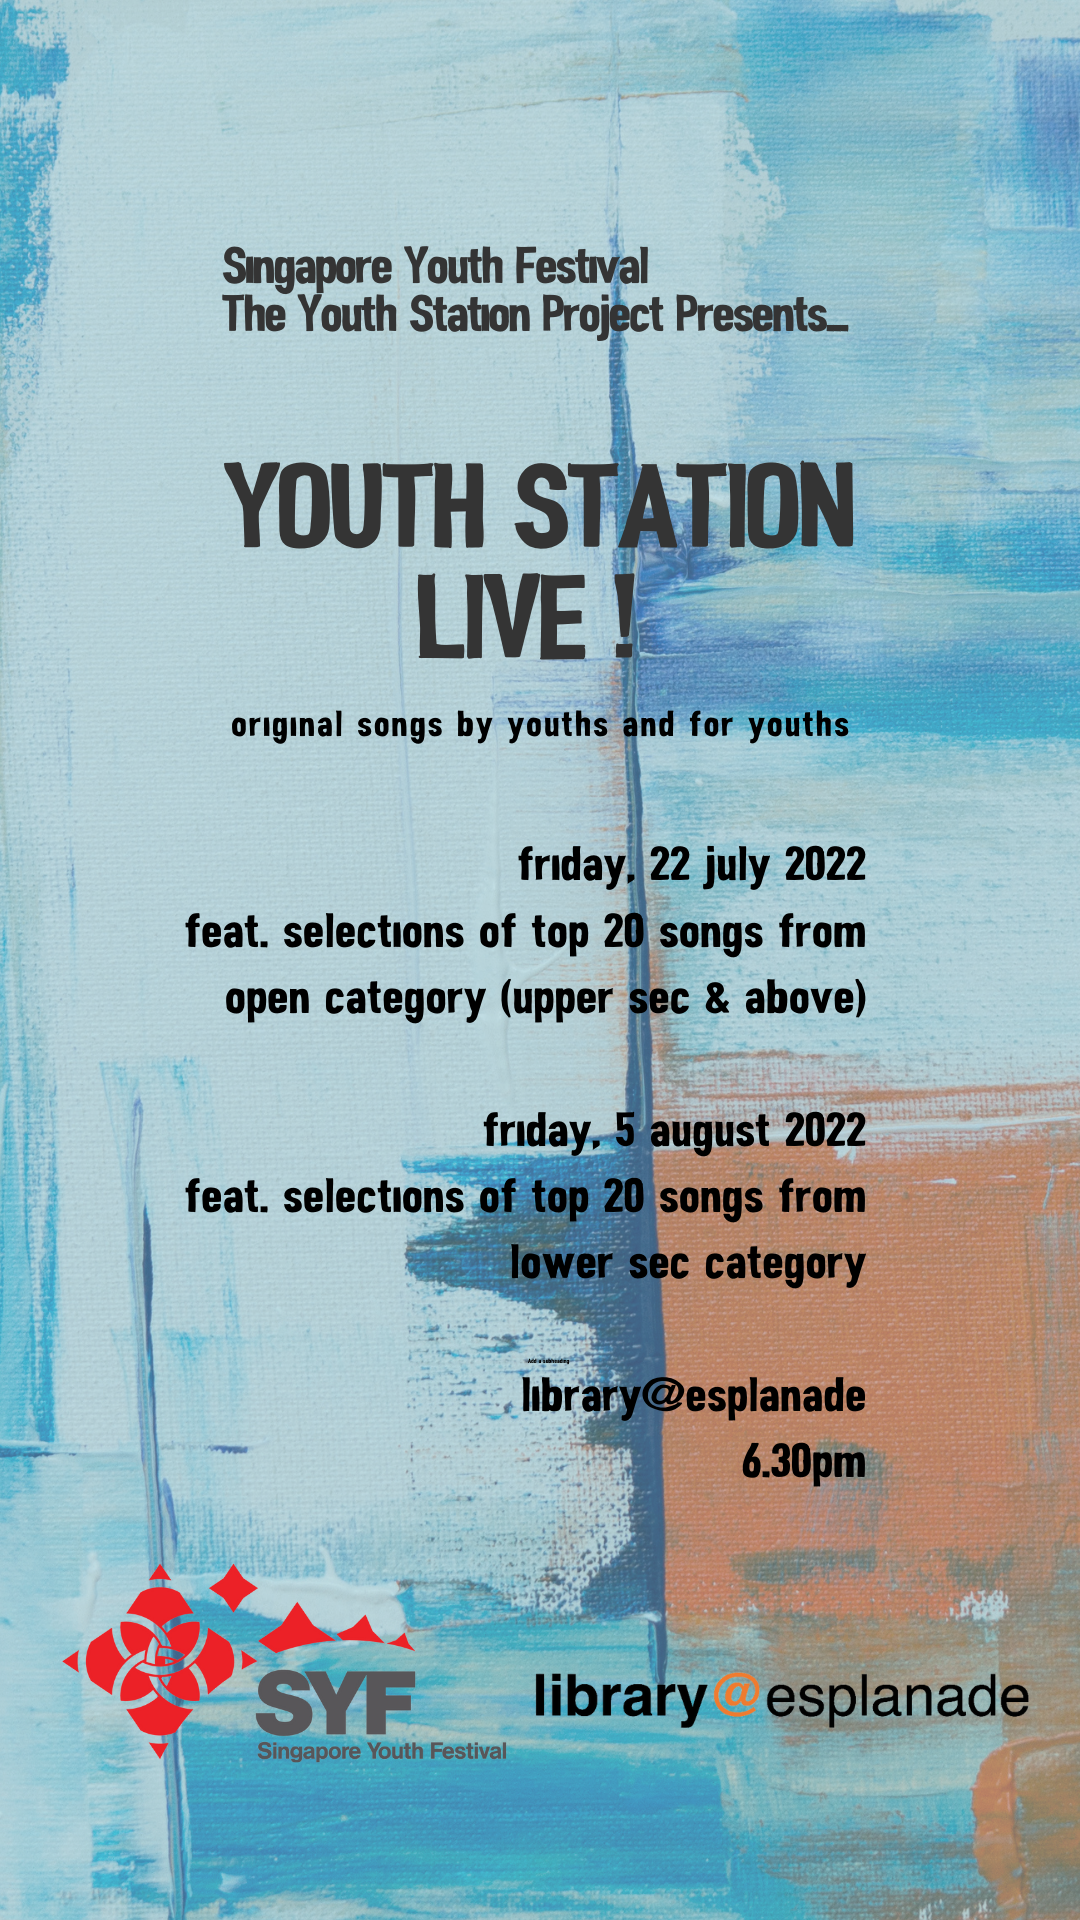 Youth Station Live 2022 Digital Banner 1080  1920 px.png